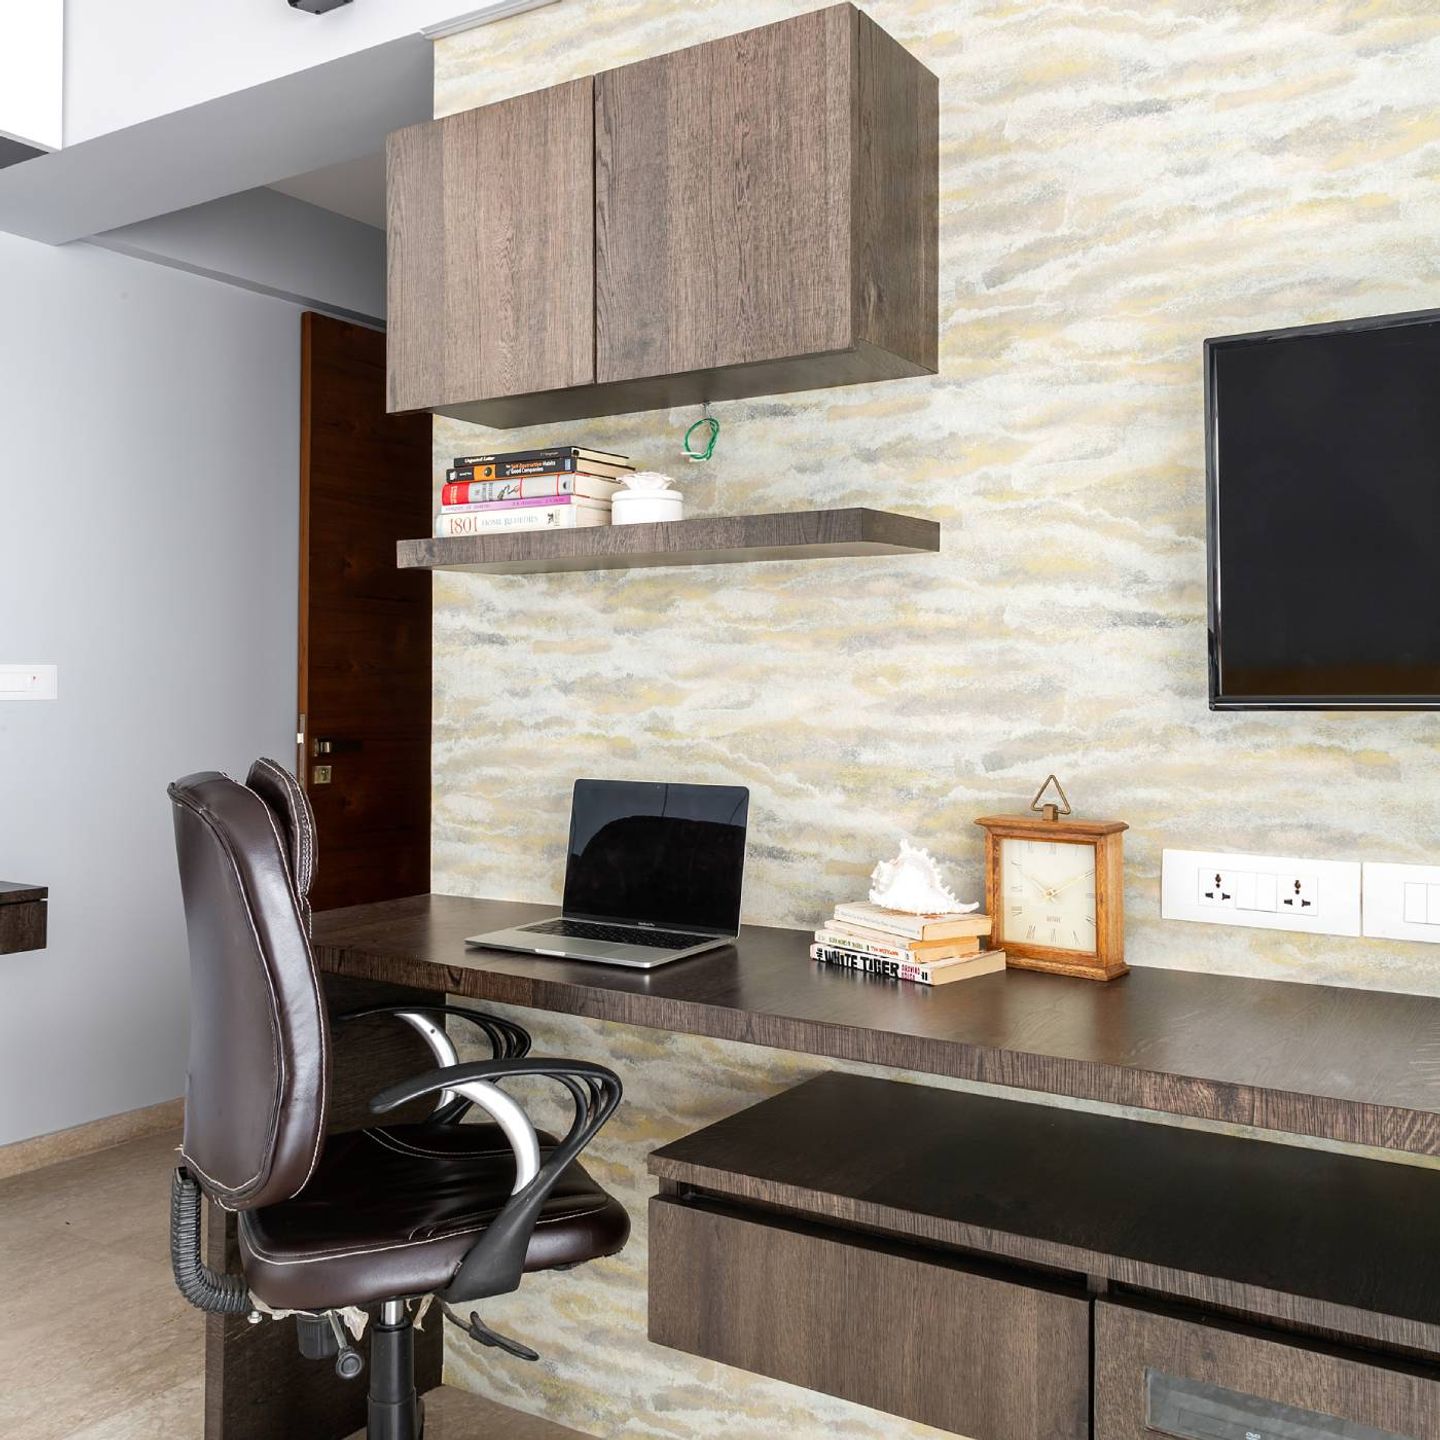 Wooden Laminate Study Room Design With TV Unit - Livspace